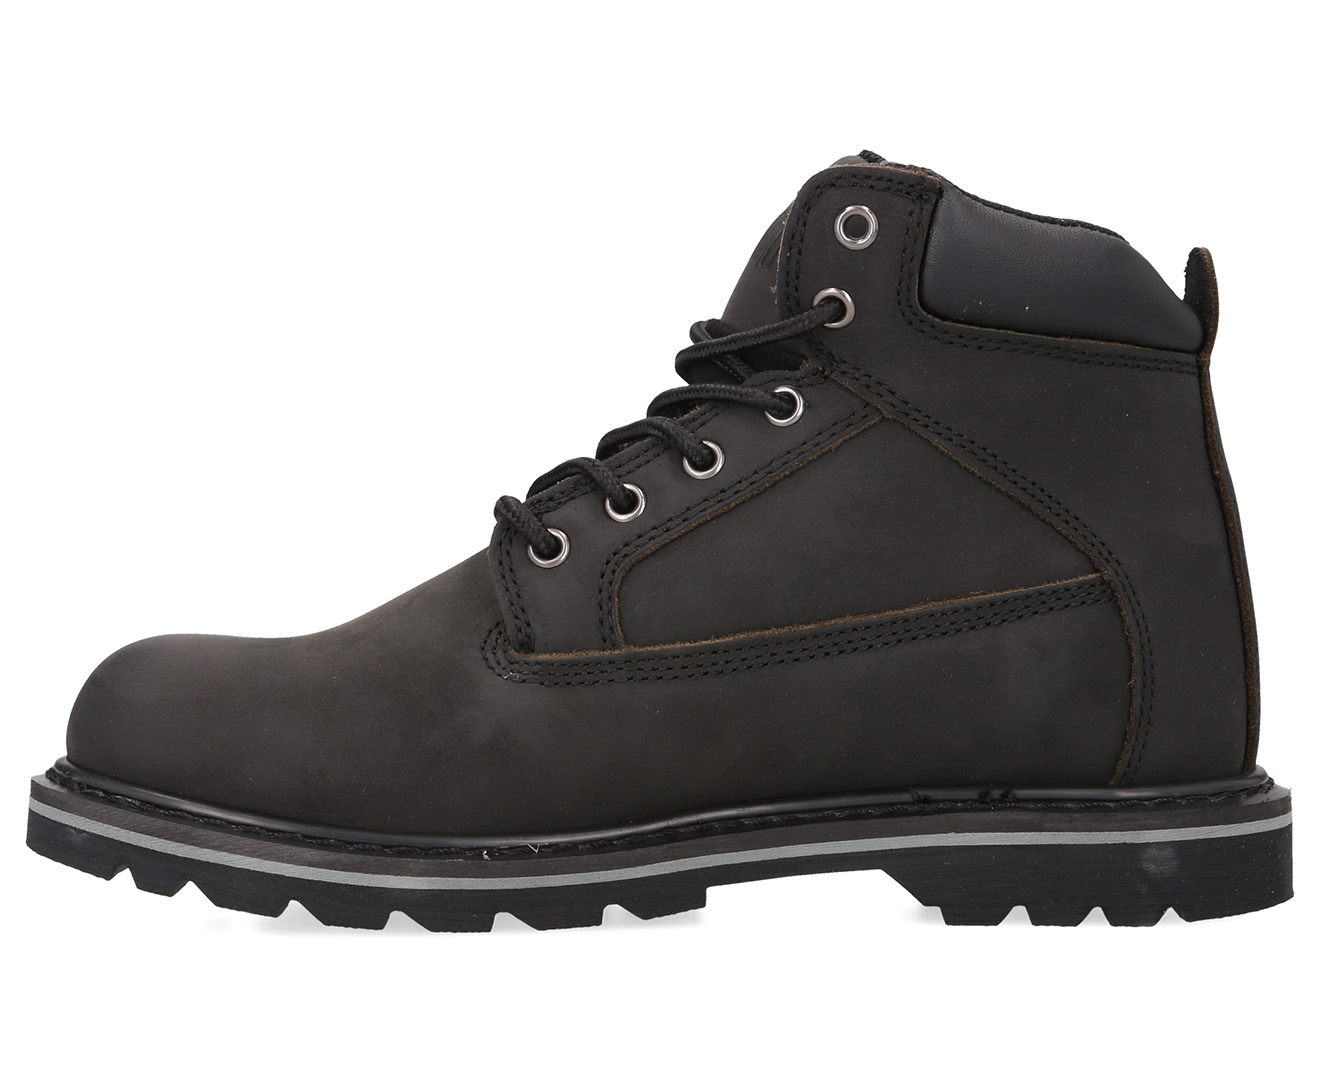 Jeep Men's Legacy Leather Hiking Boots - Black | Catch.com.au